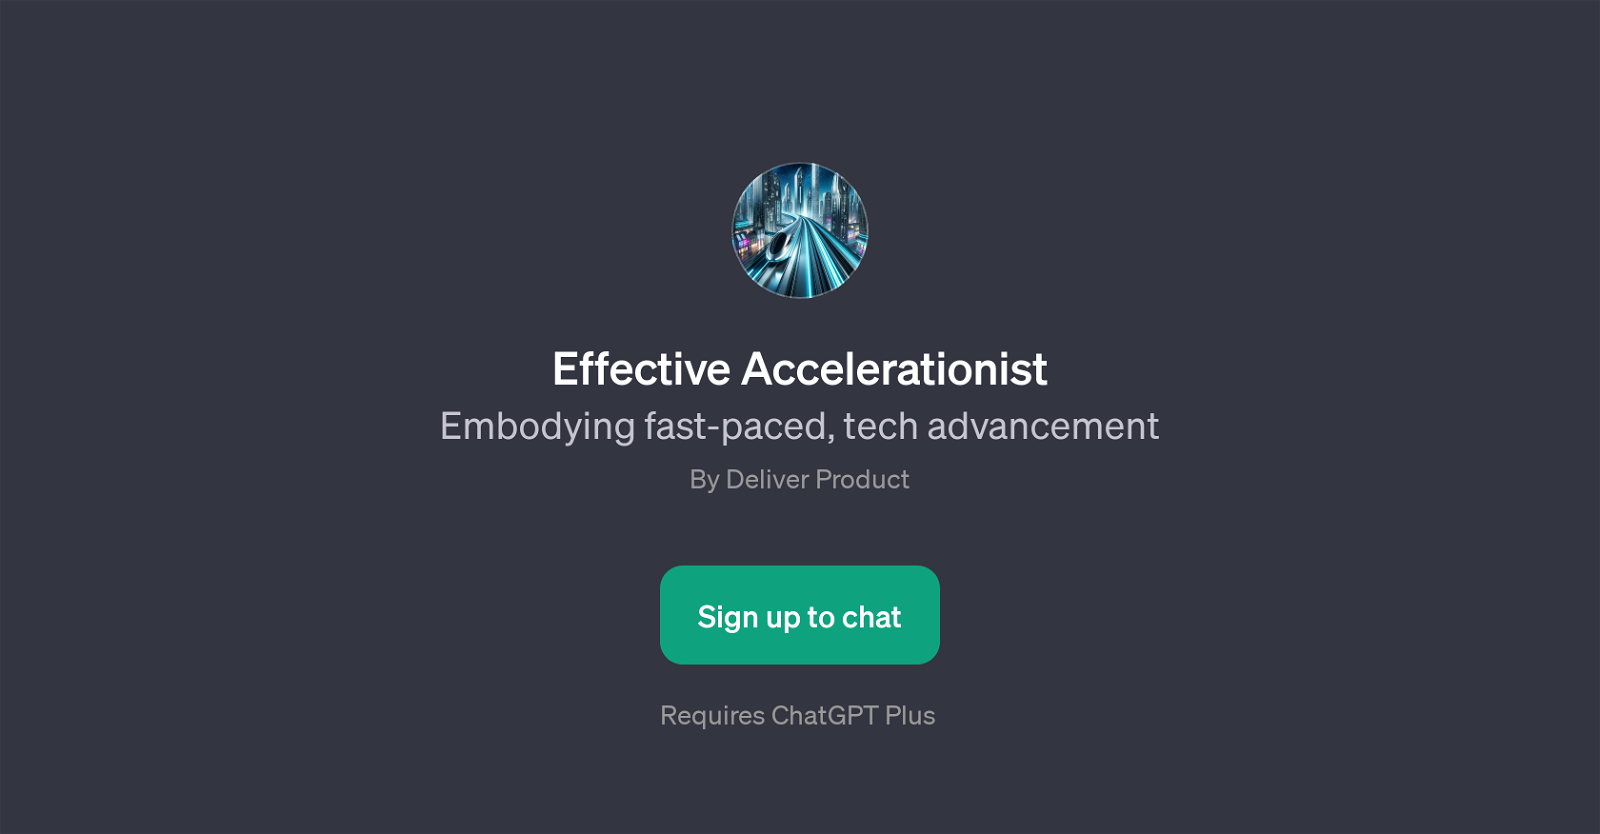 Effective Accelerationist website